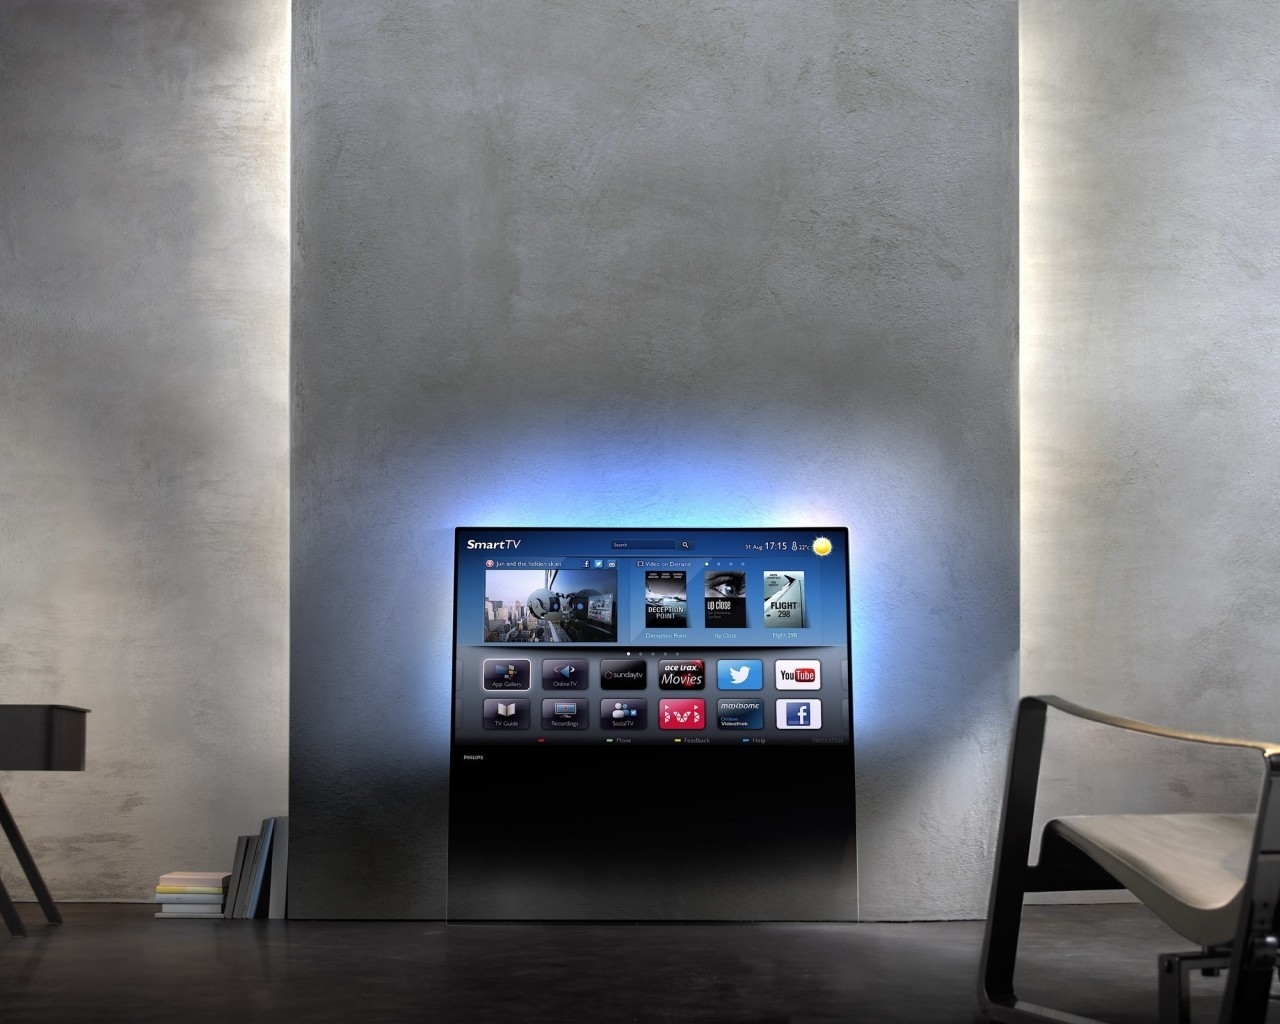 New Philips DesignLine TV for 1280 x 1024 resolution